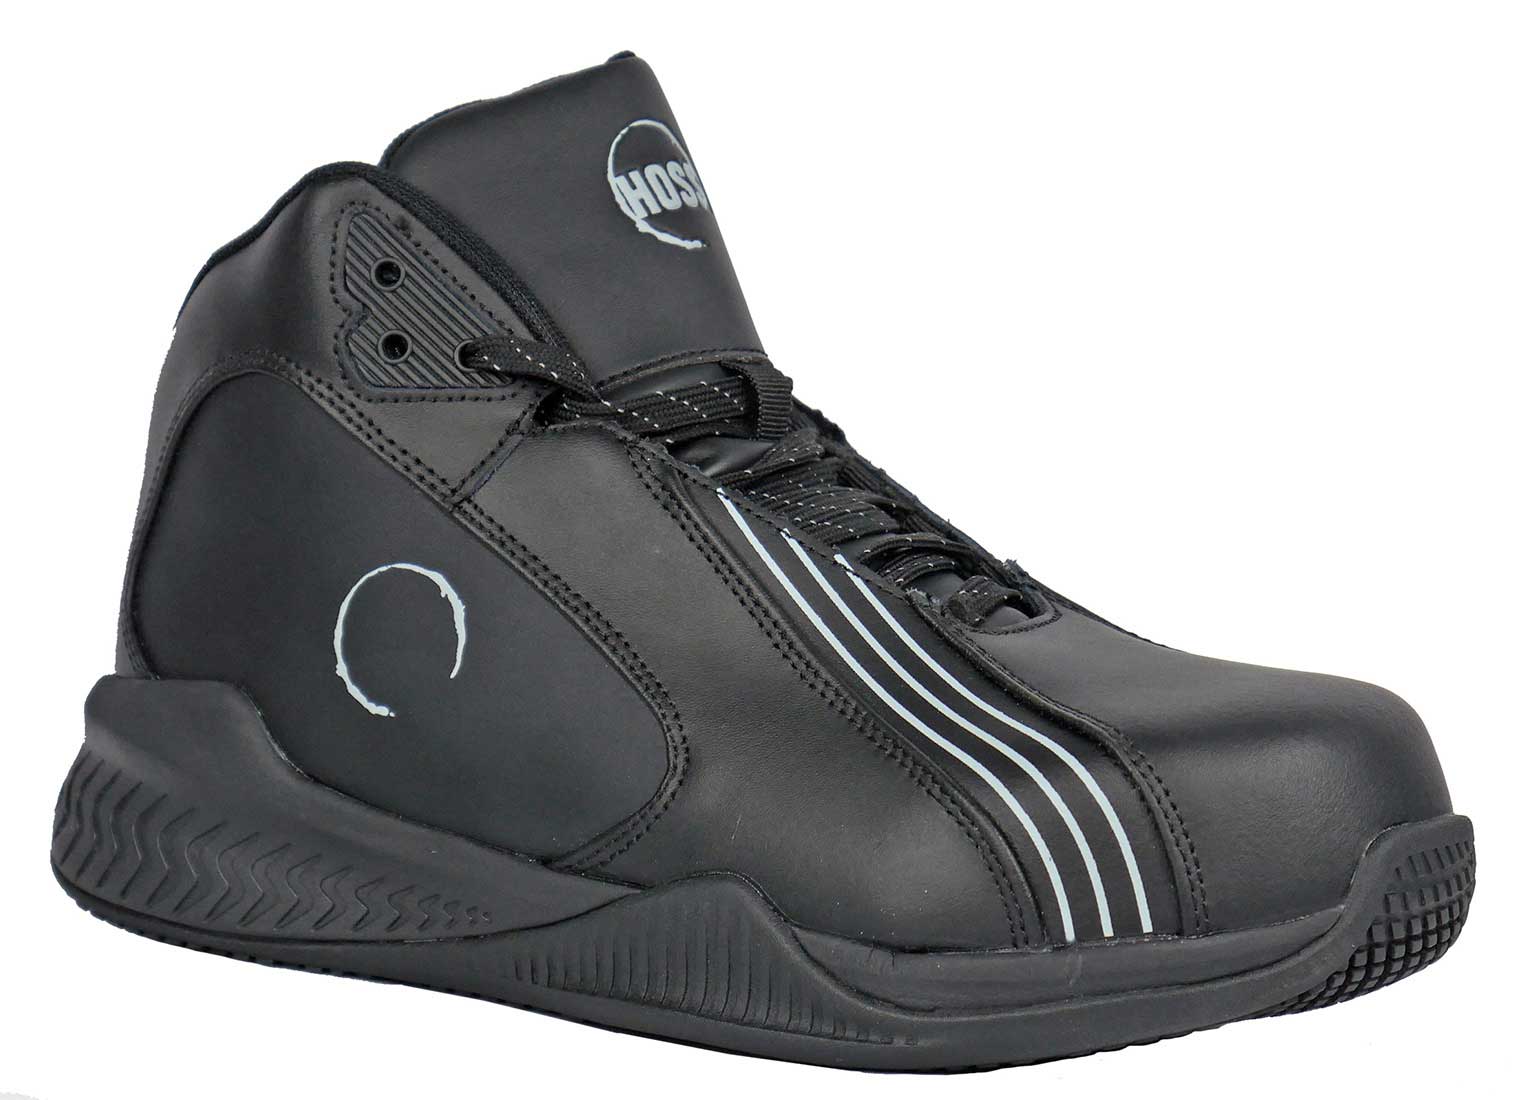 Hoss Boots 50137 Rim Men's 4 High Top Composite Toe Slip Resistant Work Shoe - Extra Depth